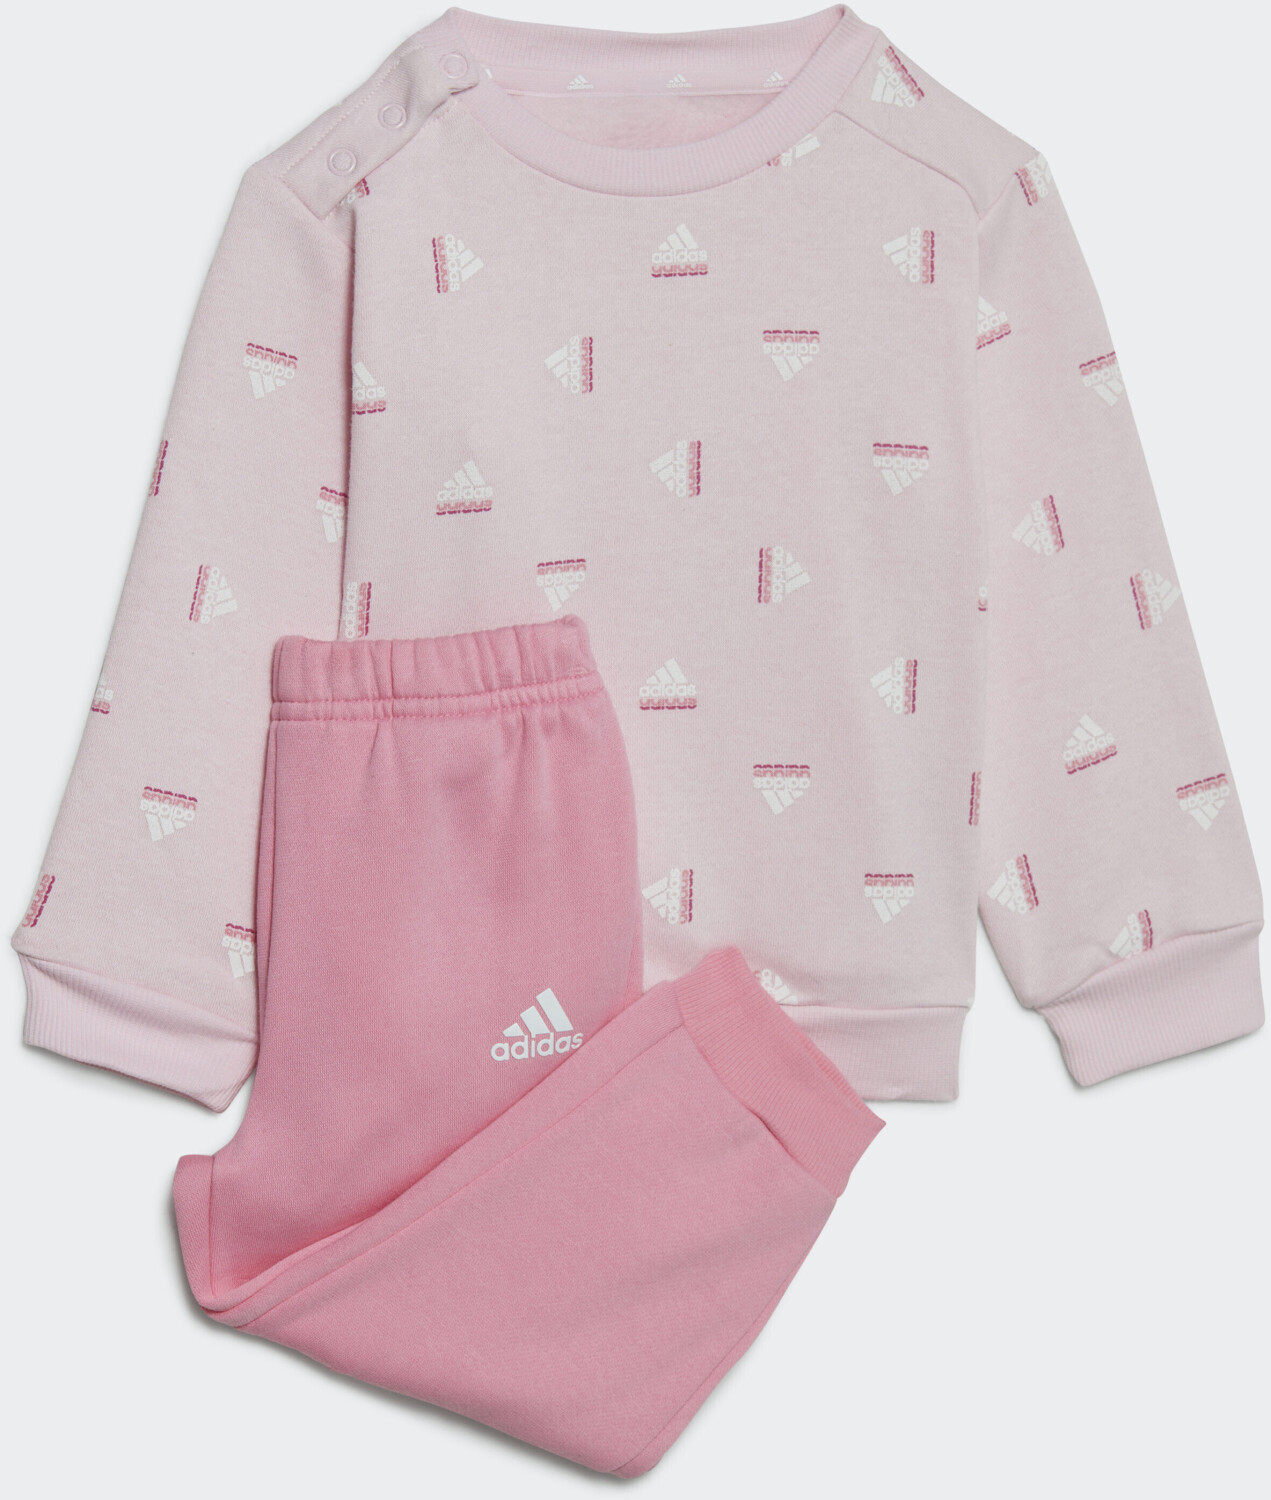 Adidas Kids Brand Love Fleece Jogginganzug (IC0452) pink/white € ab | Clear Preisvergleich 30,19 bei